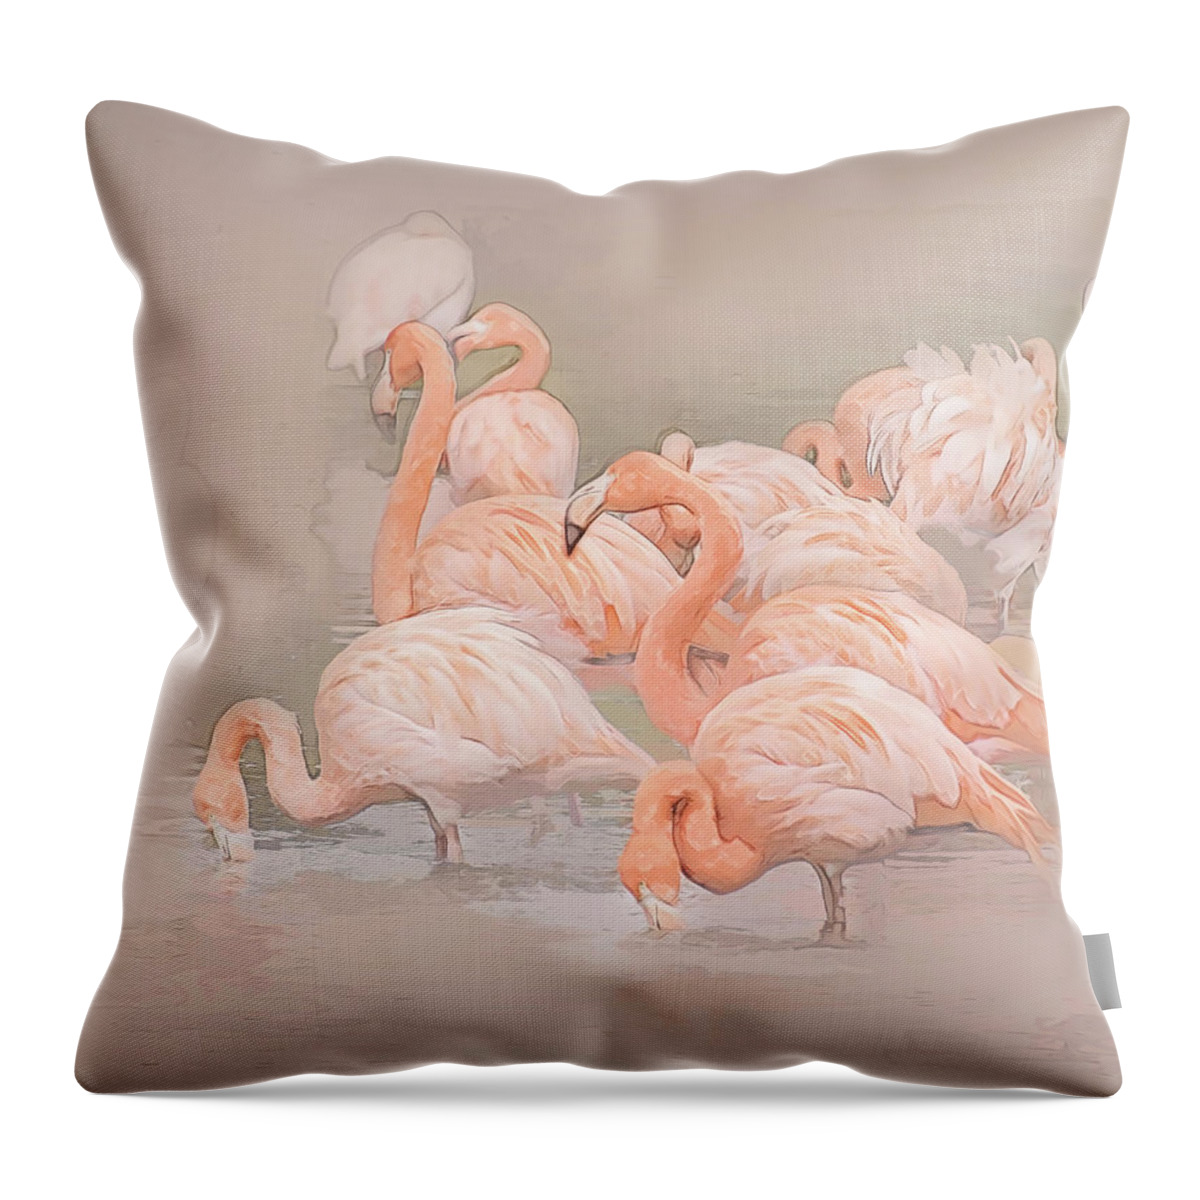 Flamingo Throw Pillow featuring the photograph Flamingo Fun by Brian Tarr